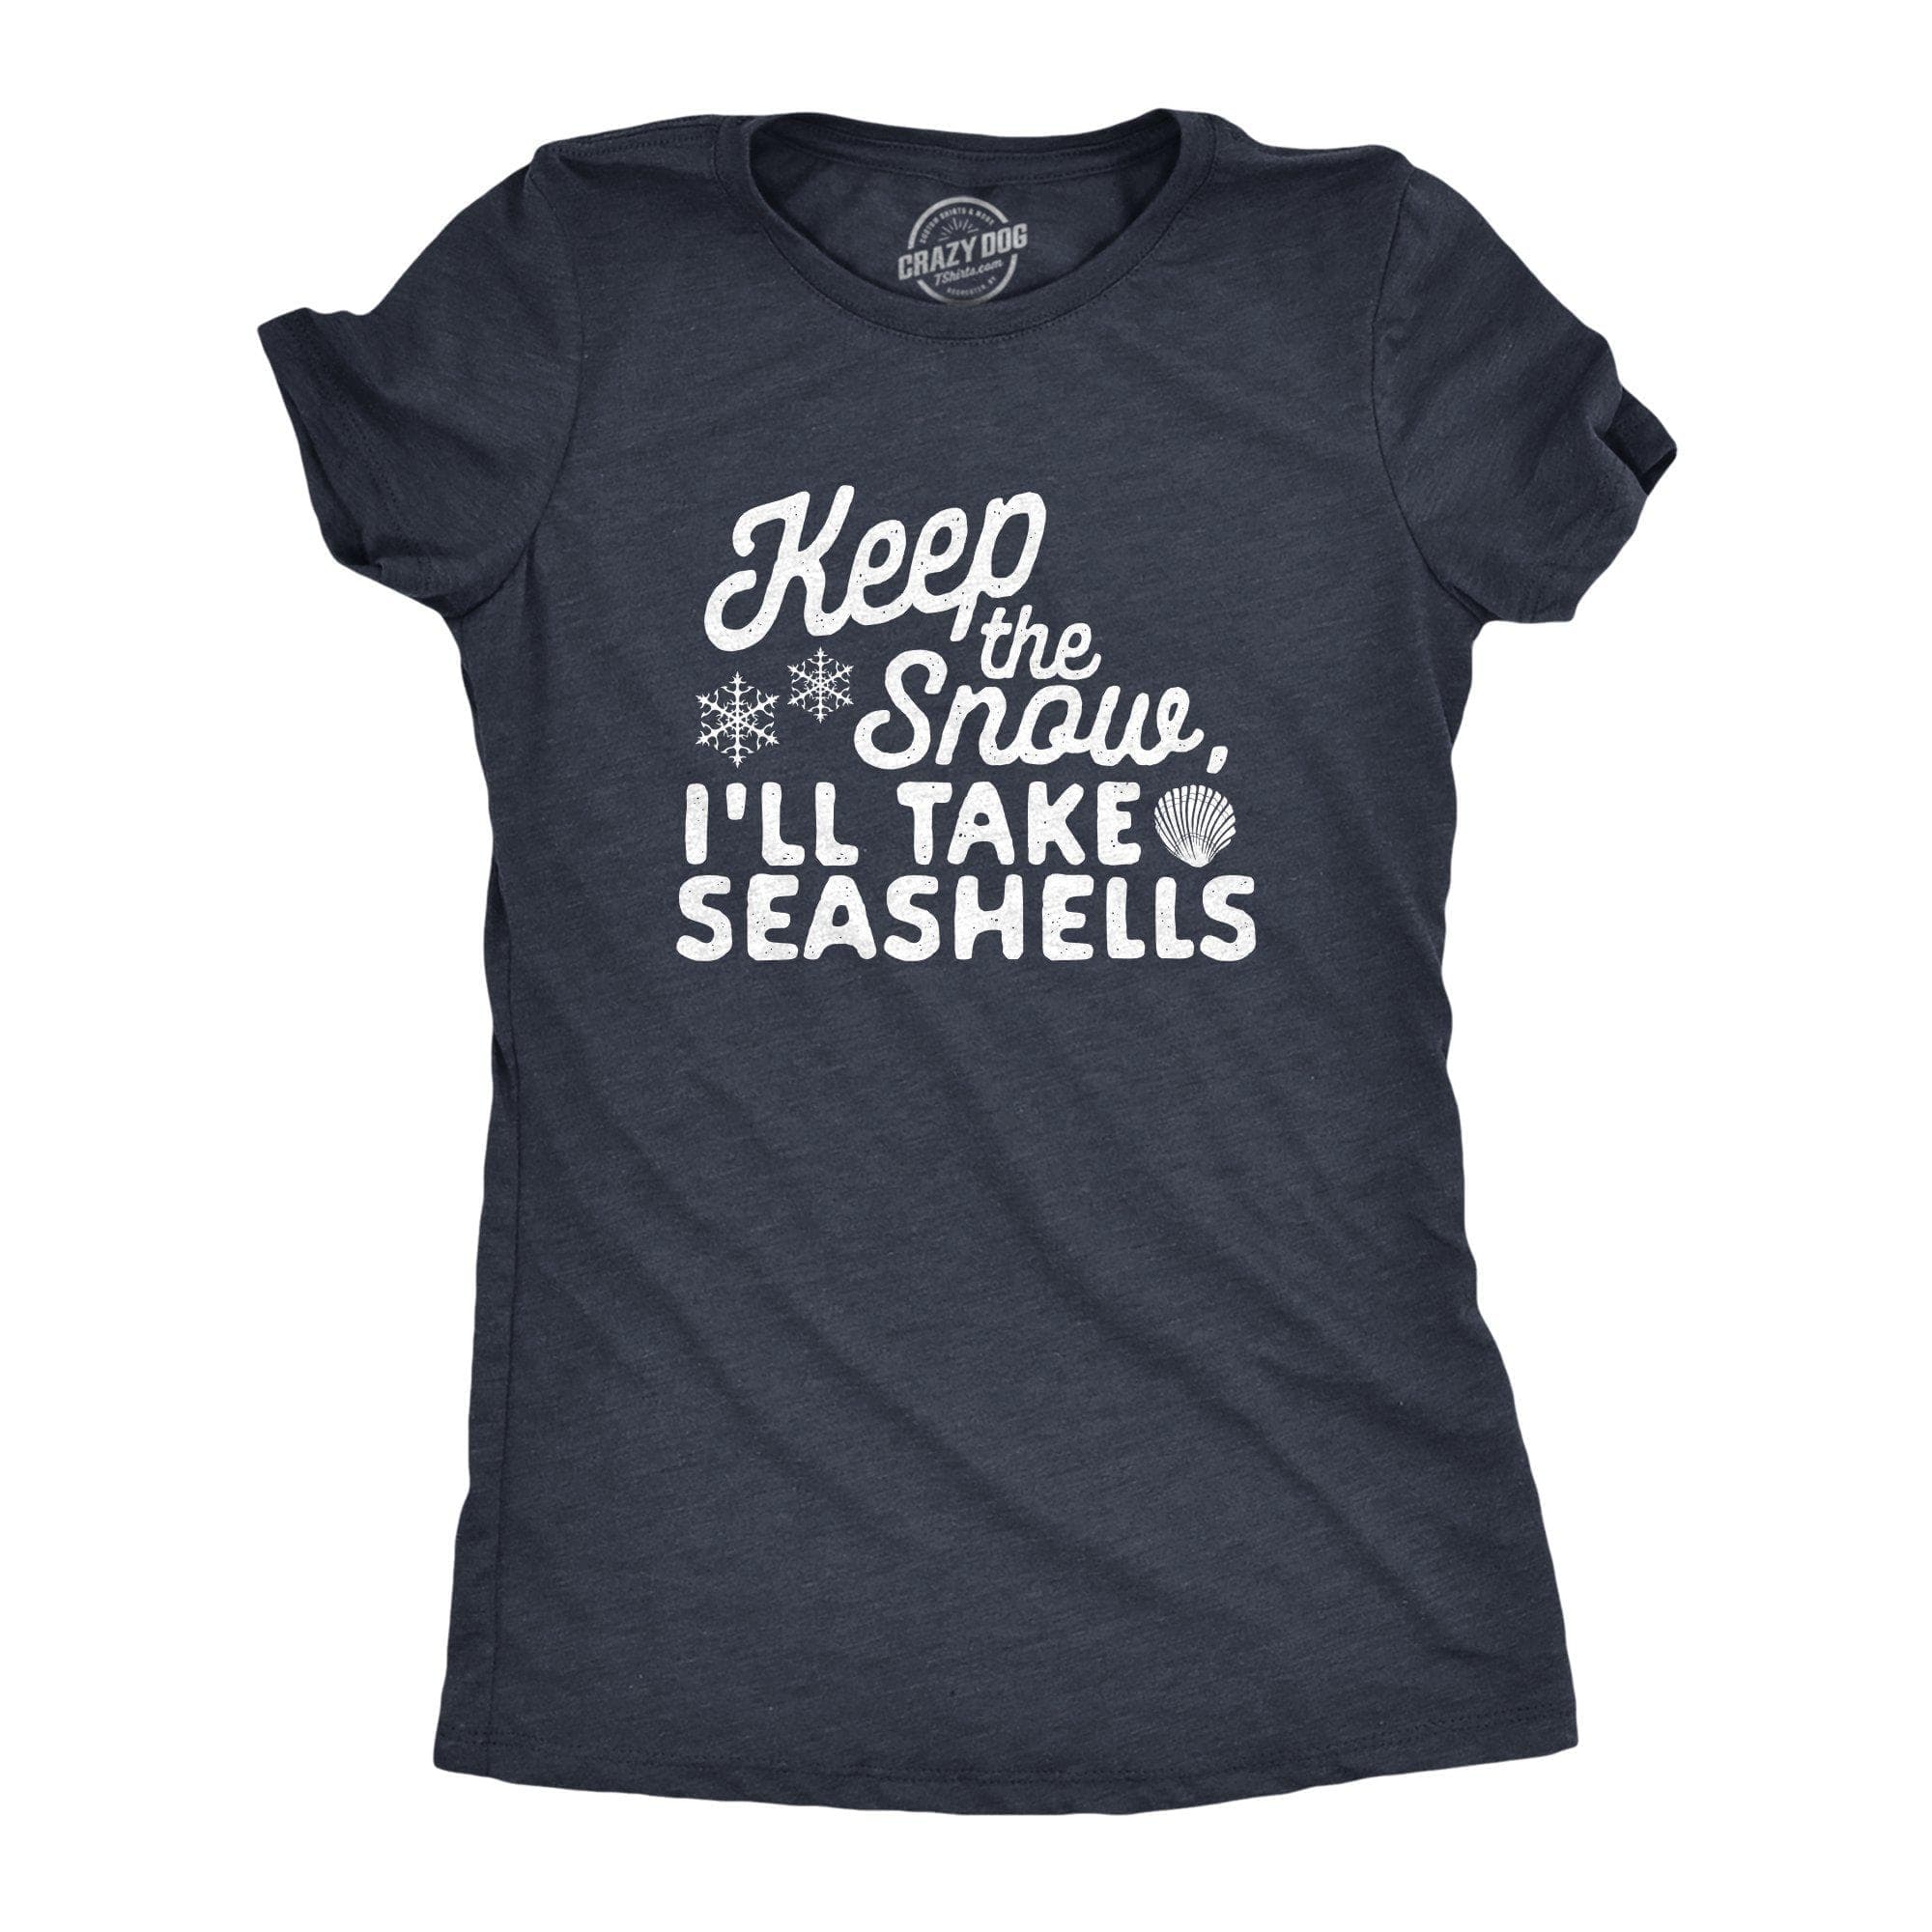 Keep The Snow, I'll Take The Seashells Women's Tshirt - Crazy Dog T-Shirts